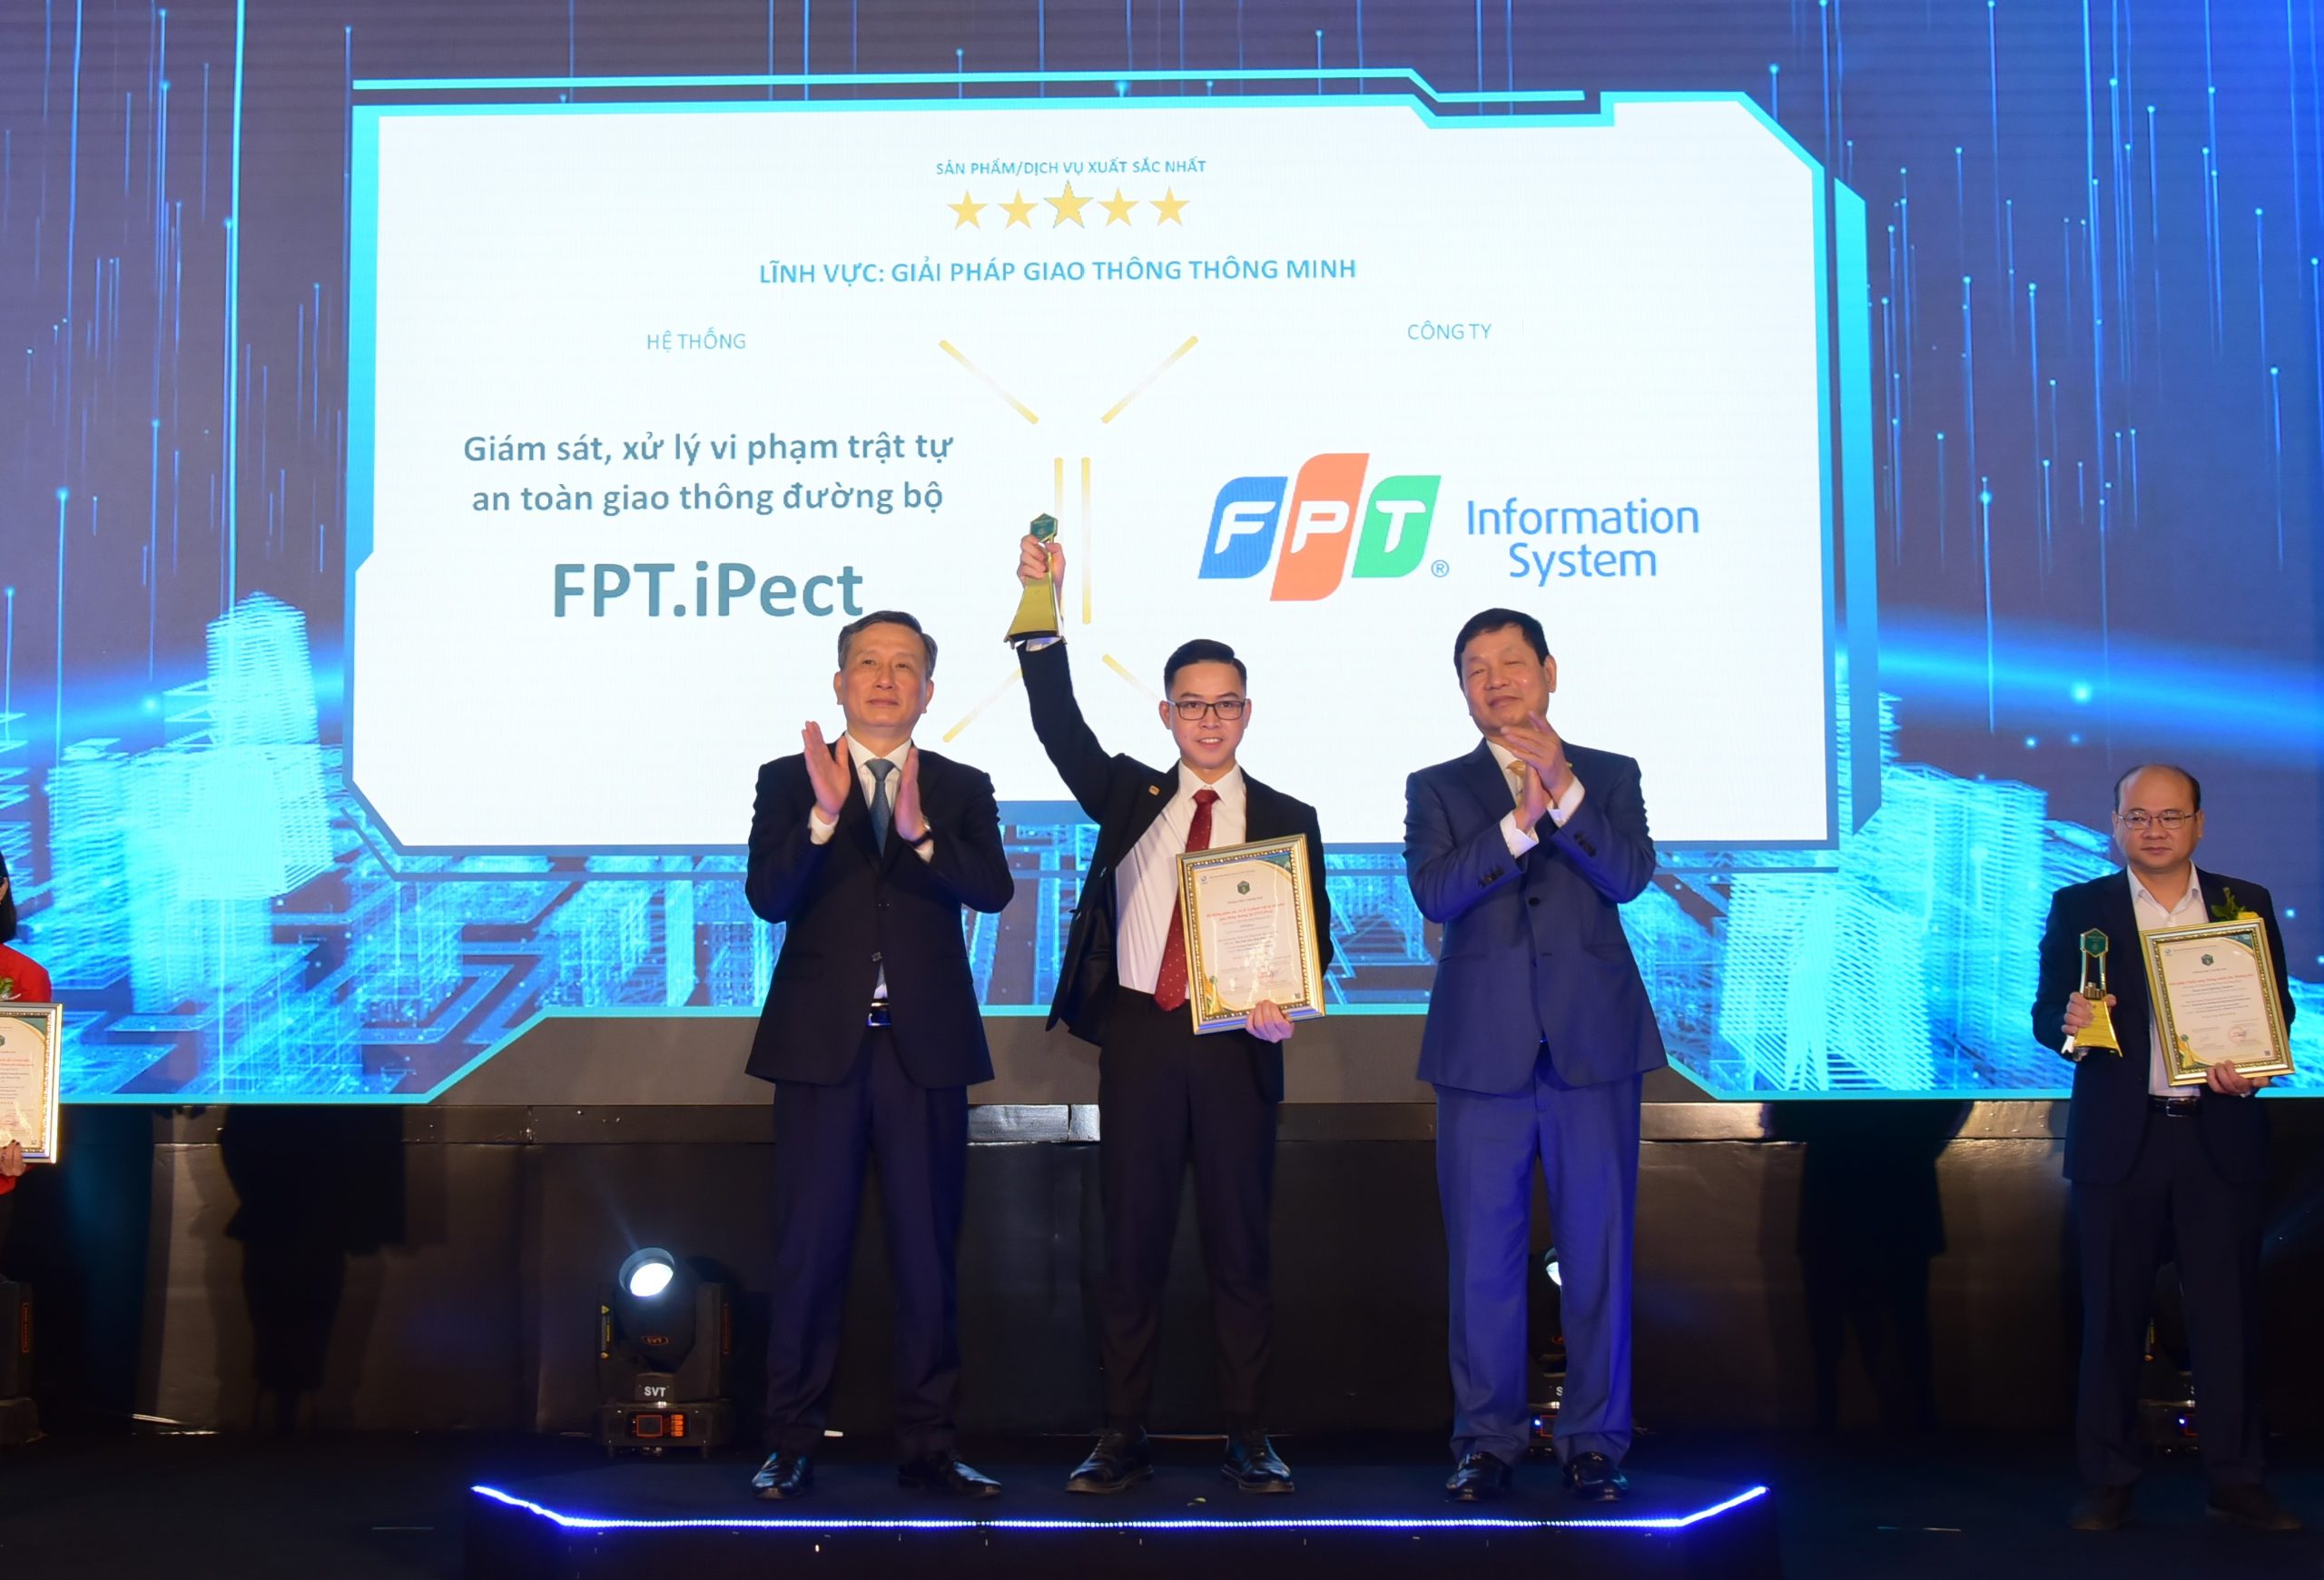 2021 Vietnam Smart City Awards (5-star) – Traffic Enforcement System (FPT.iPect)